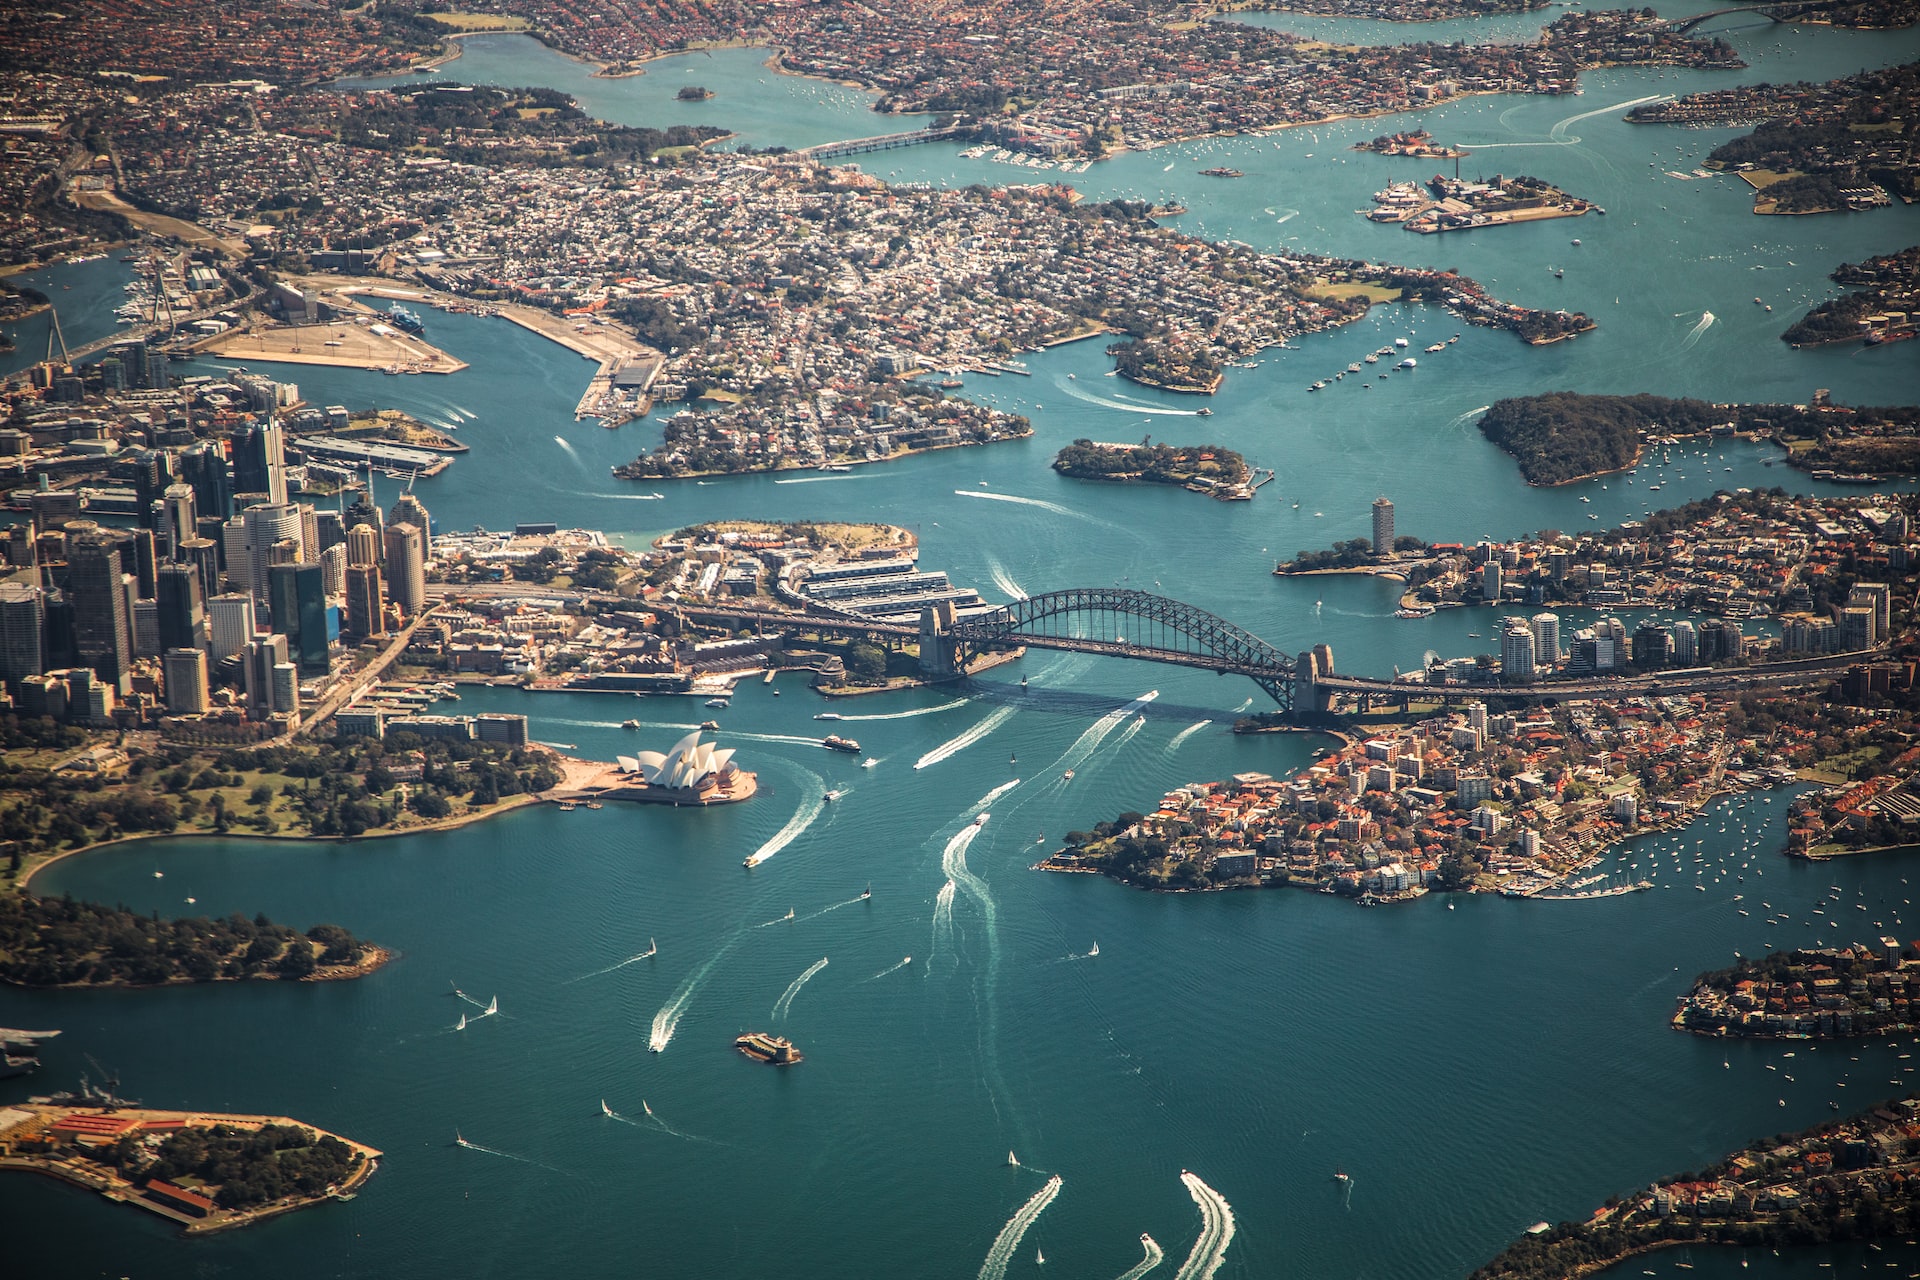 A birds-eye view of Sydney, Australia.